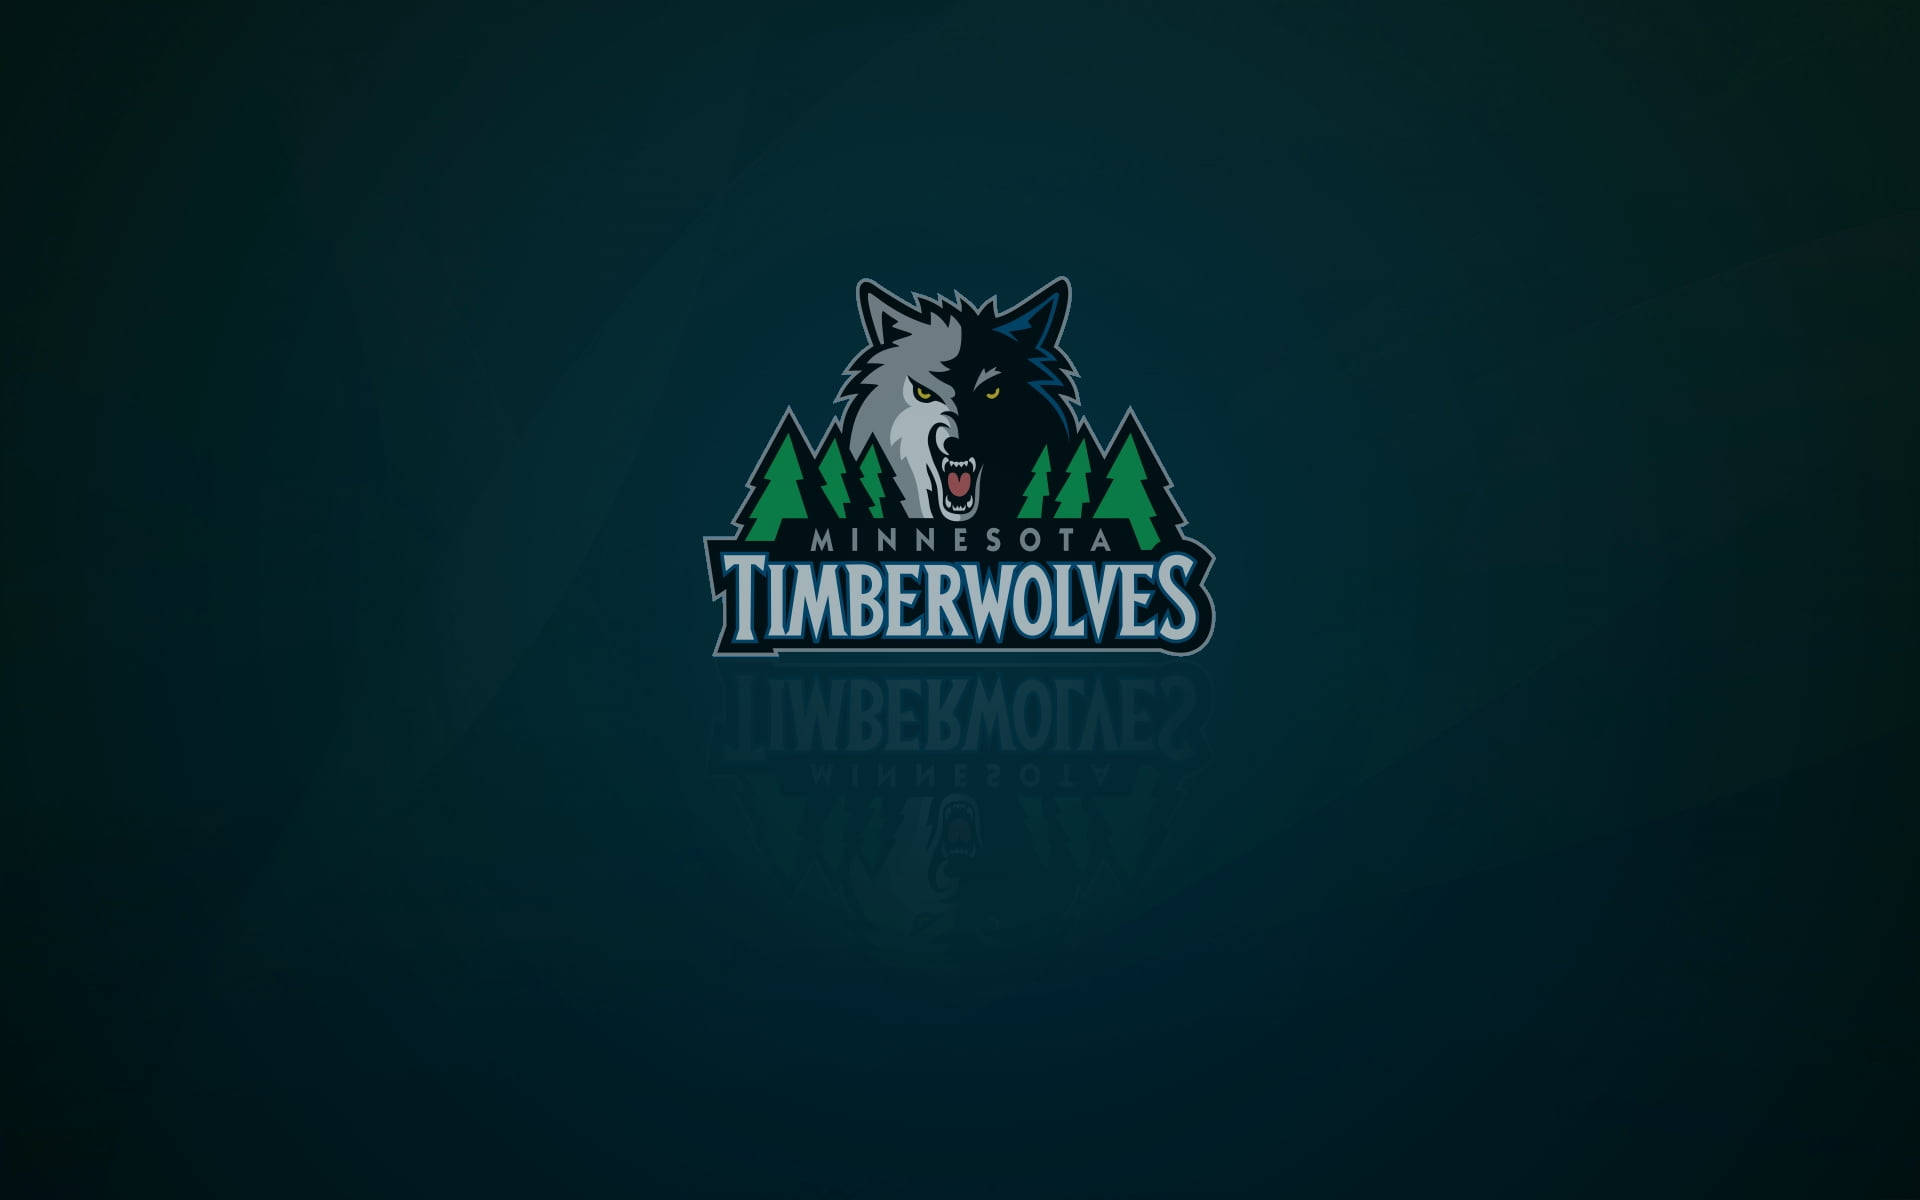 Minnesota Timberwolves Logo In Digital Background